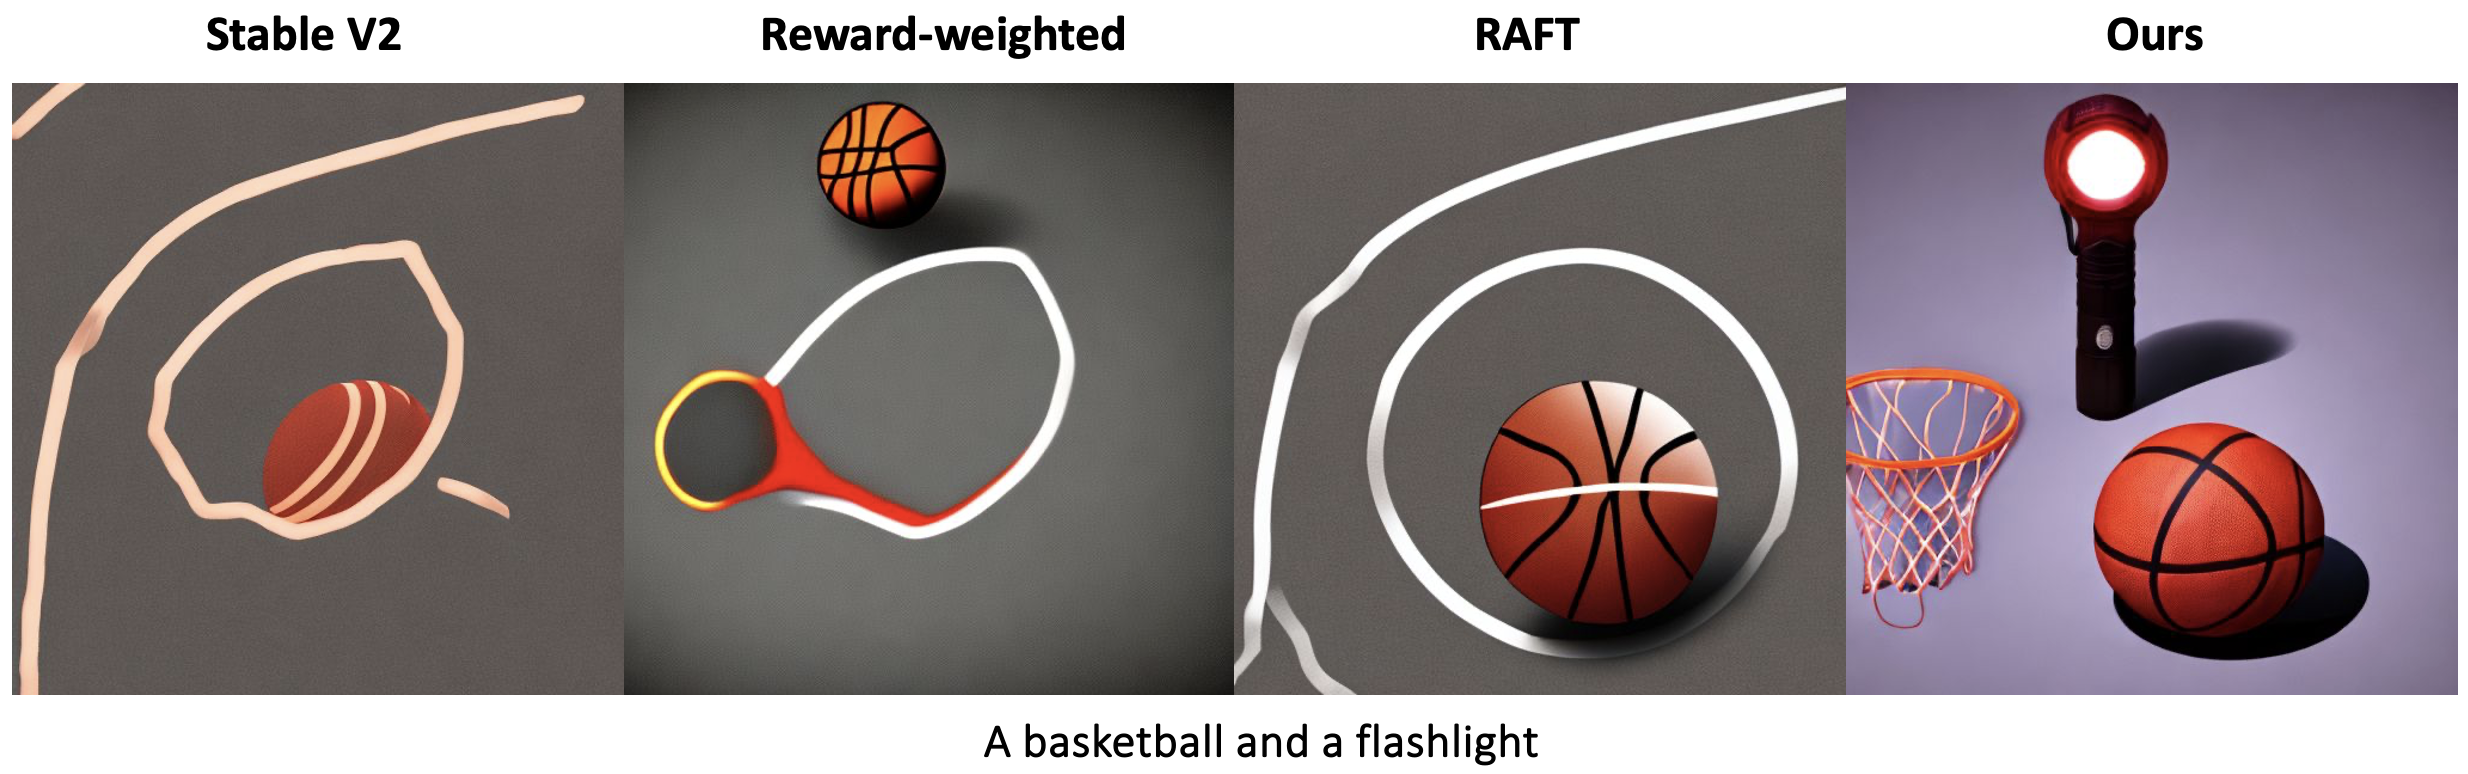 A basketball and a flashlight